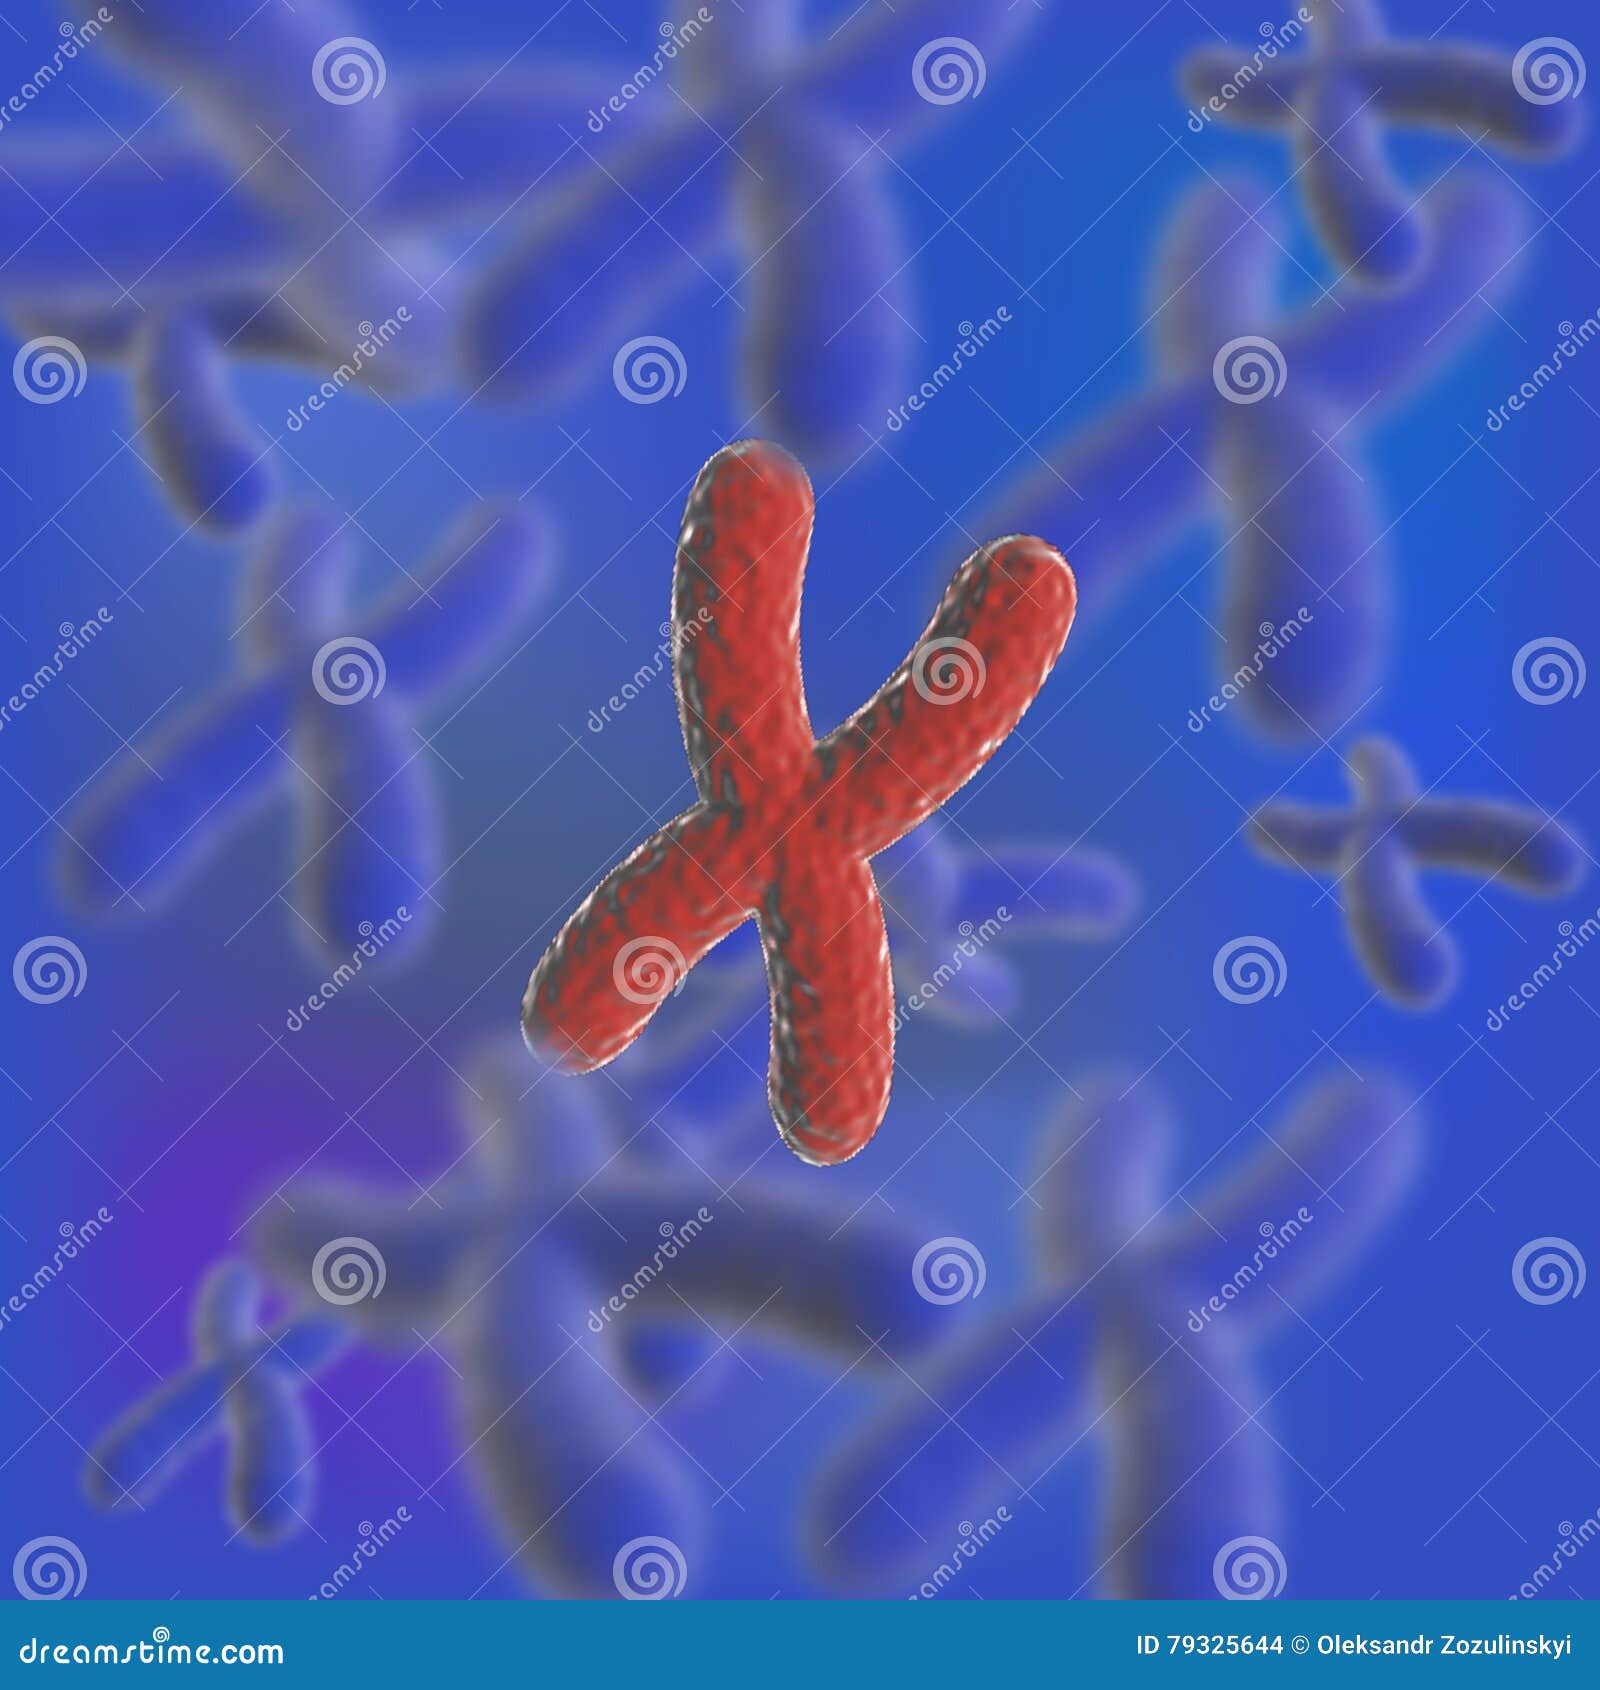 Discover more than 143 chromosomes wallpaper